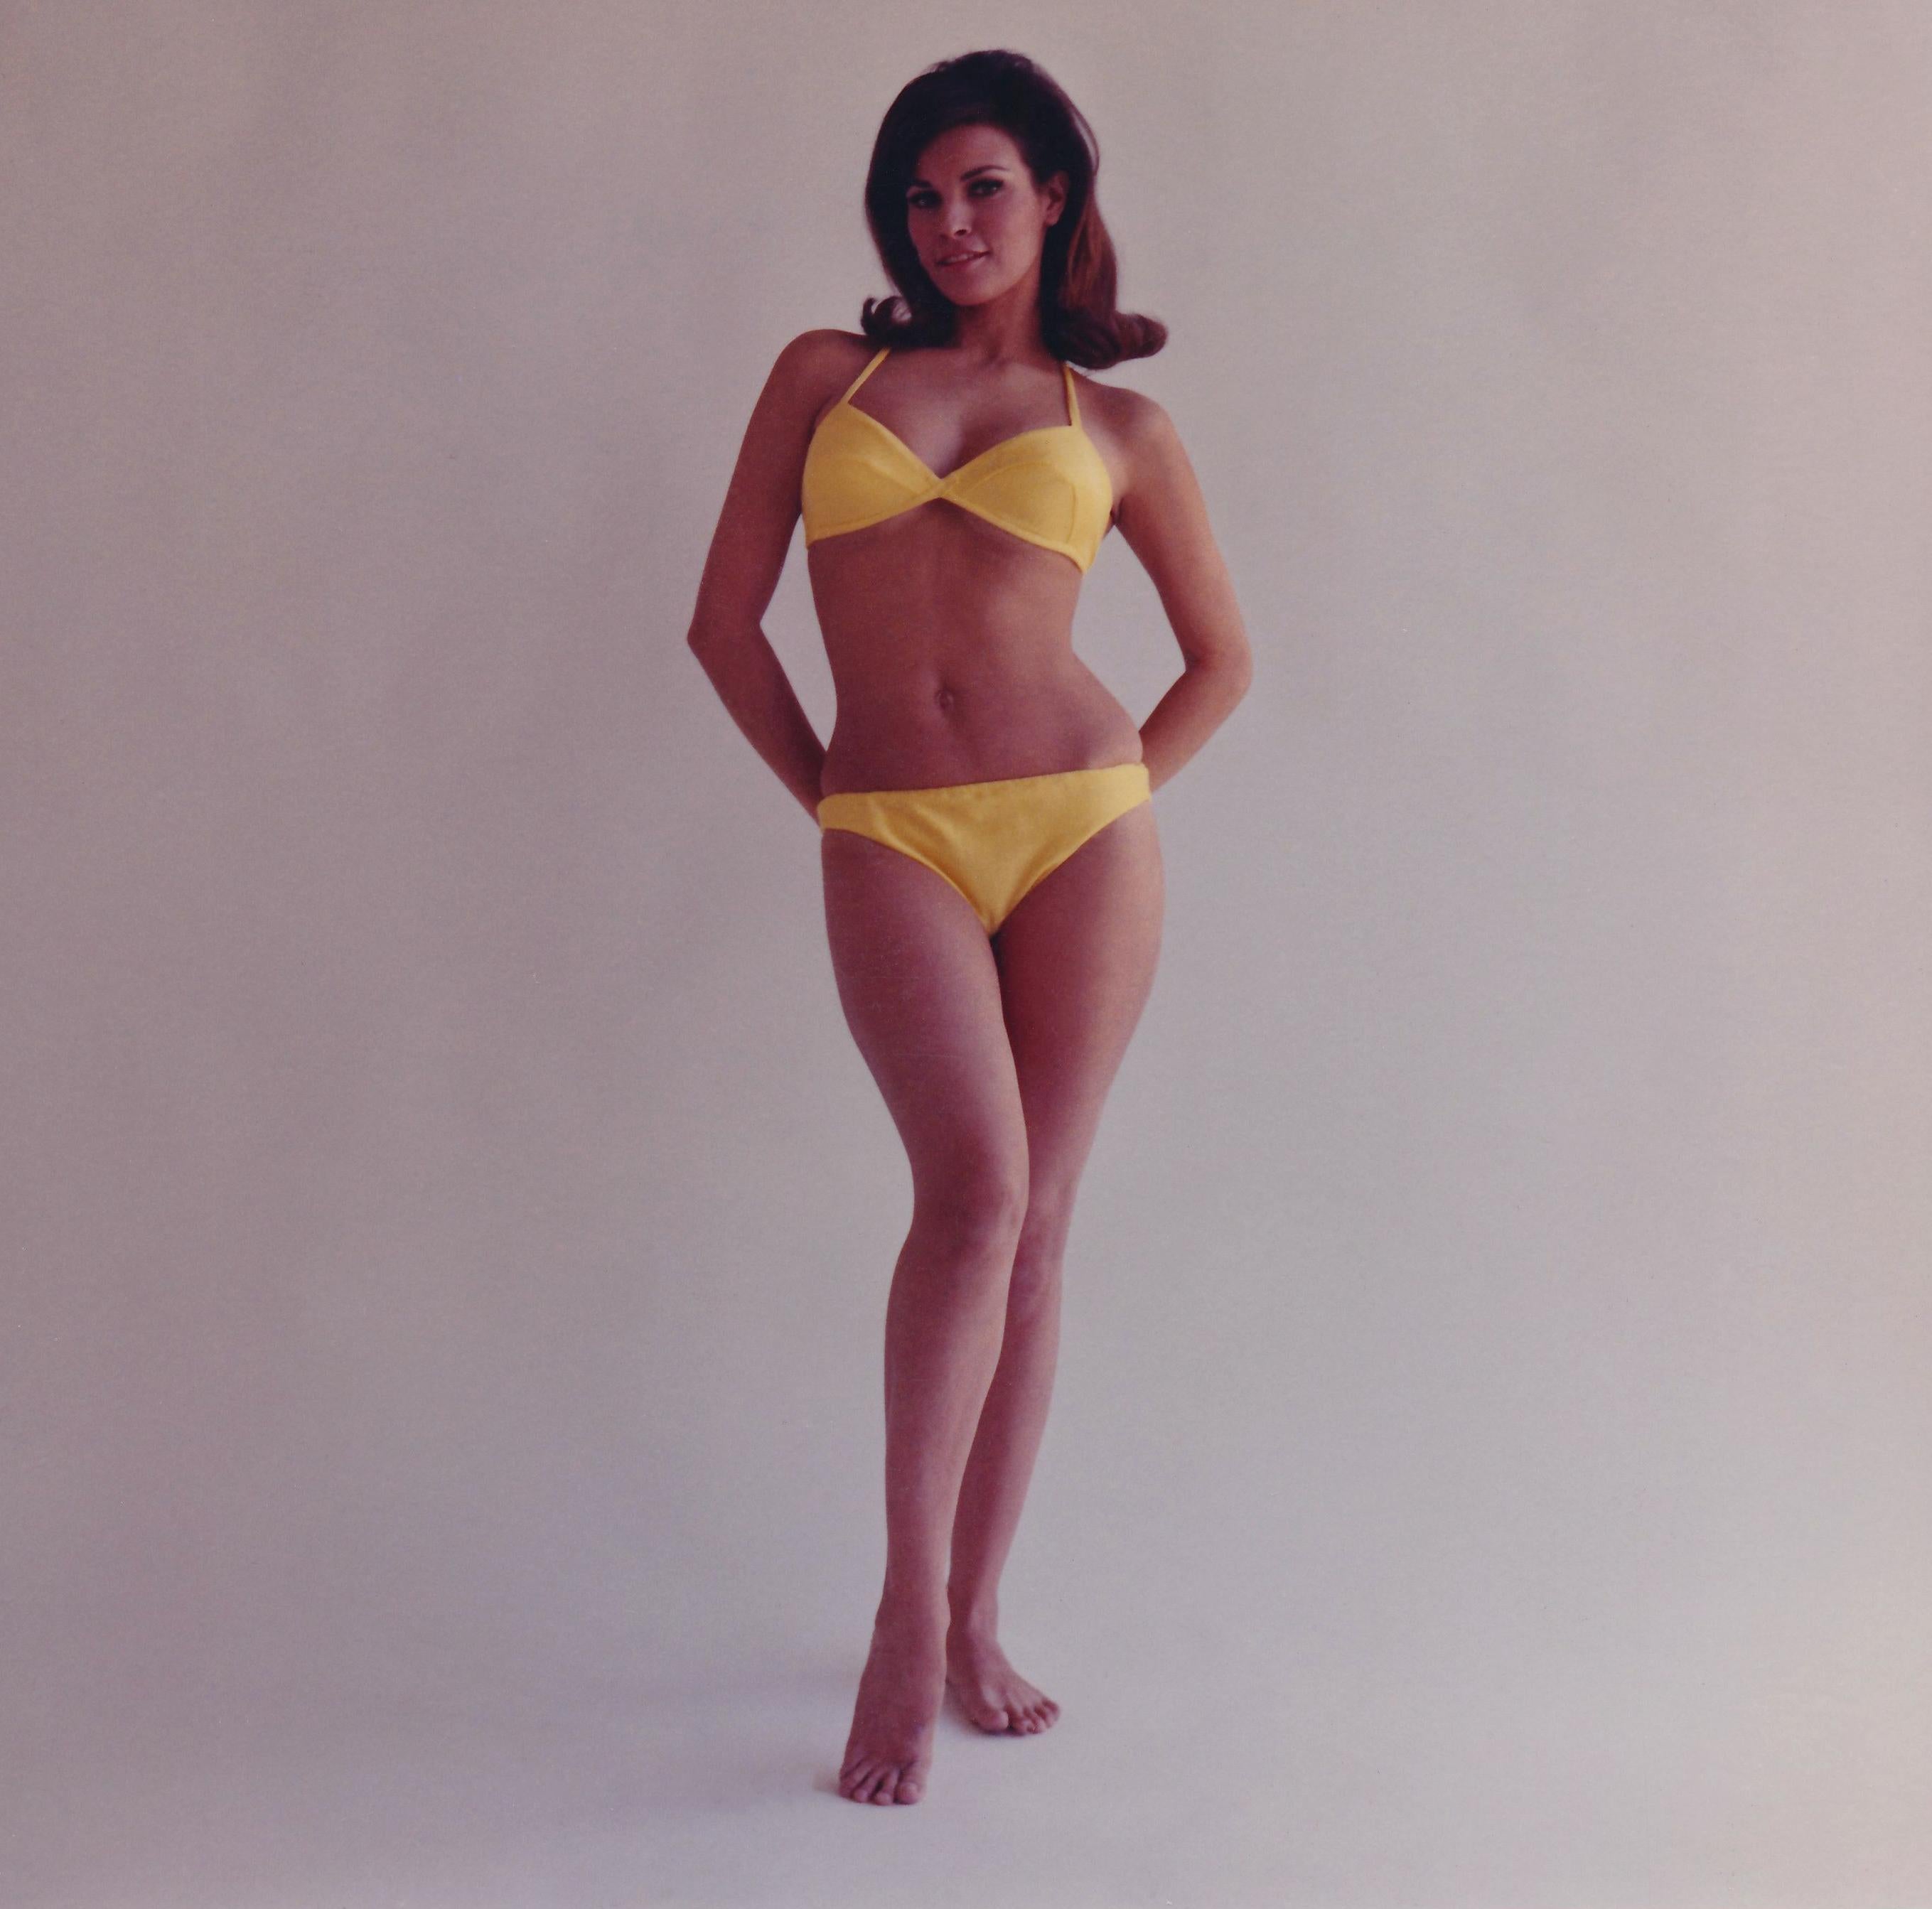 Frank Bez Portrait Photograph - Raquel Welch in Yellow Bikini Globe Photos Fine Art Print